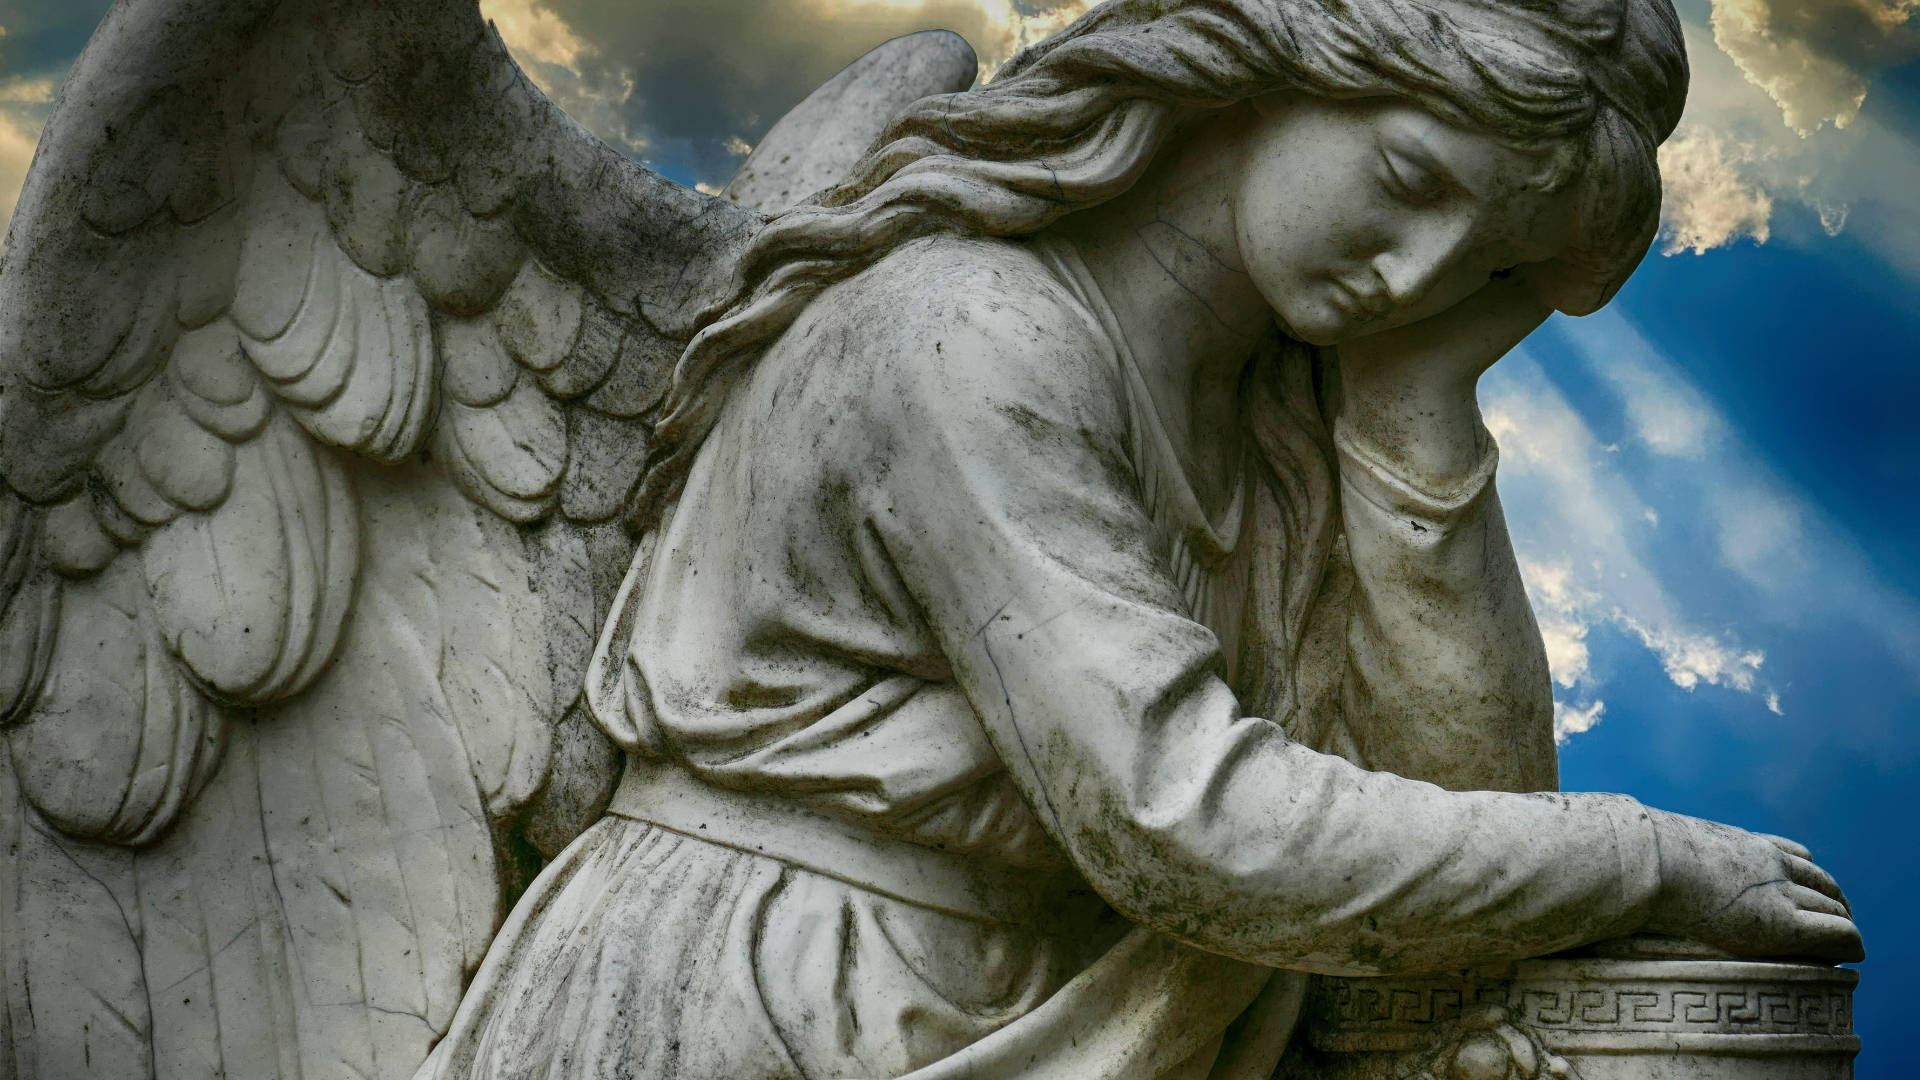 Divine Guardian - A Biblical Angel In Contemplation.